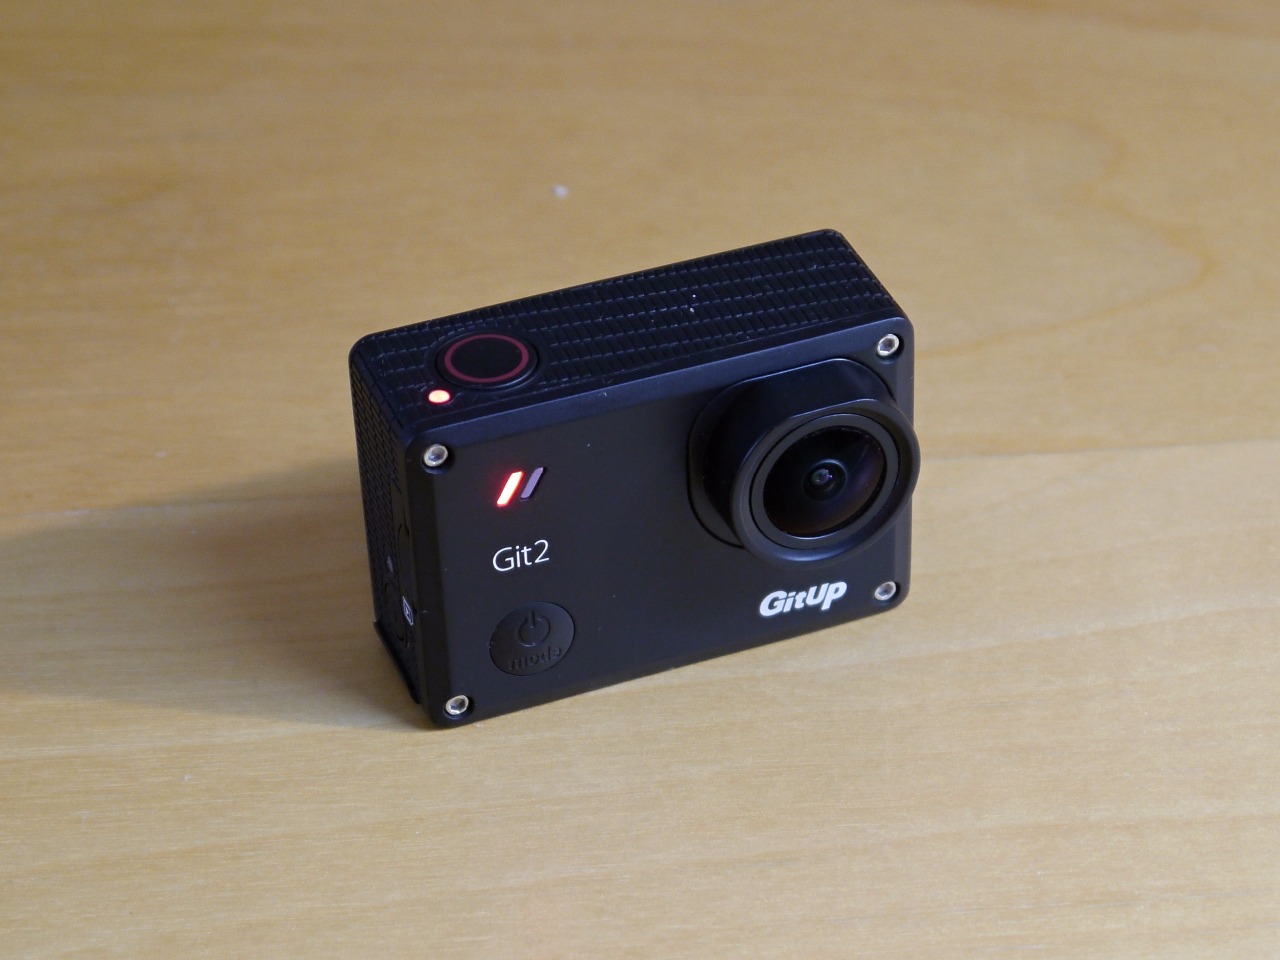 Kamera GitUp Git2